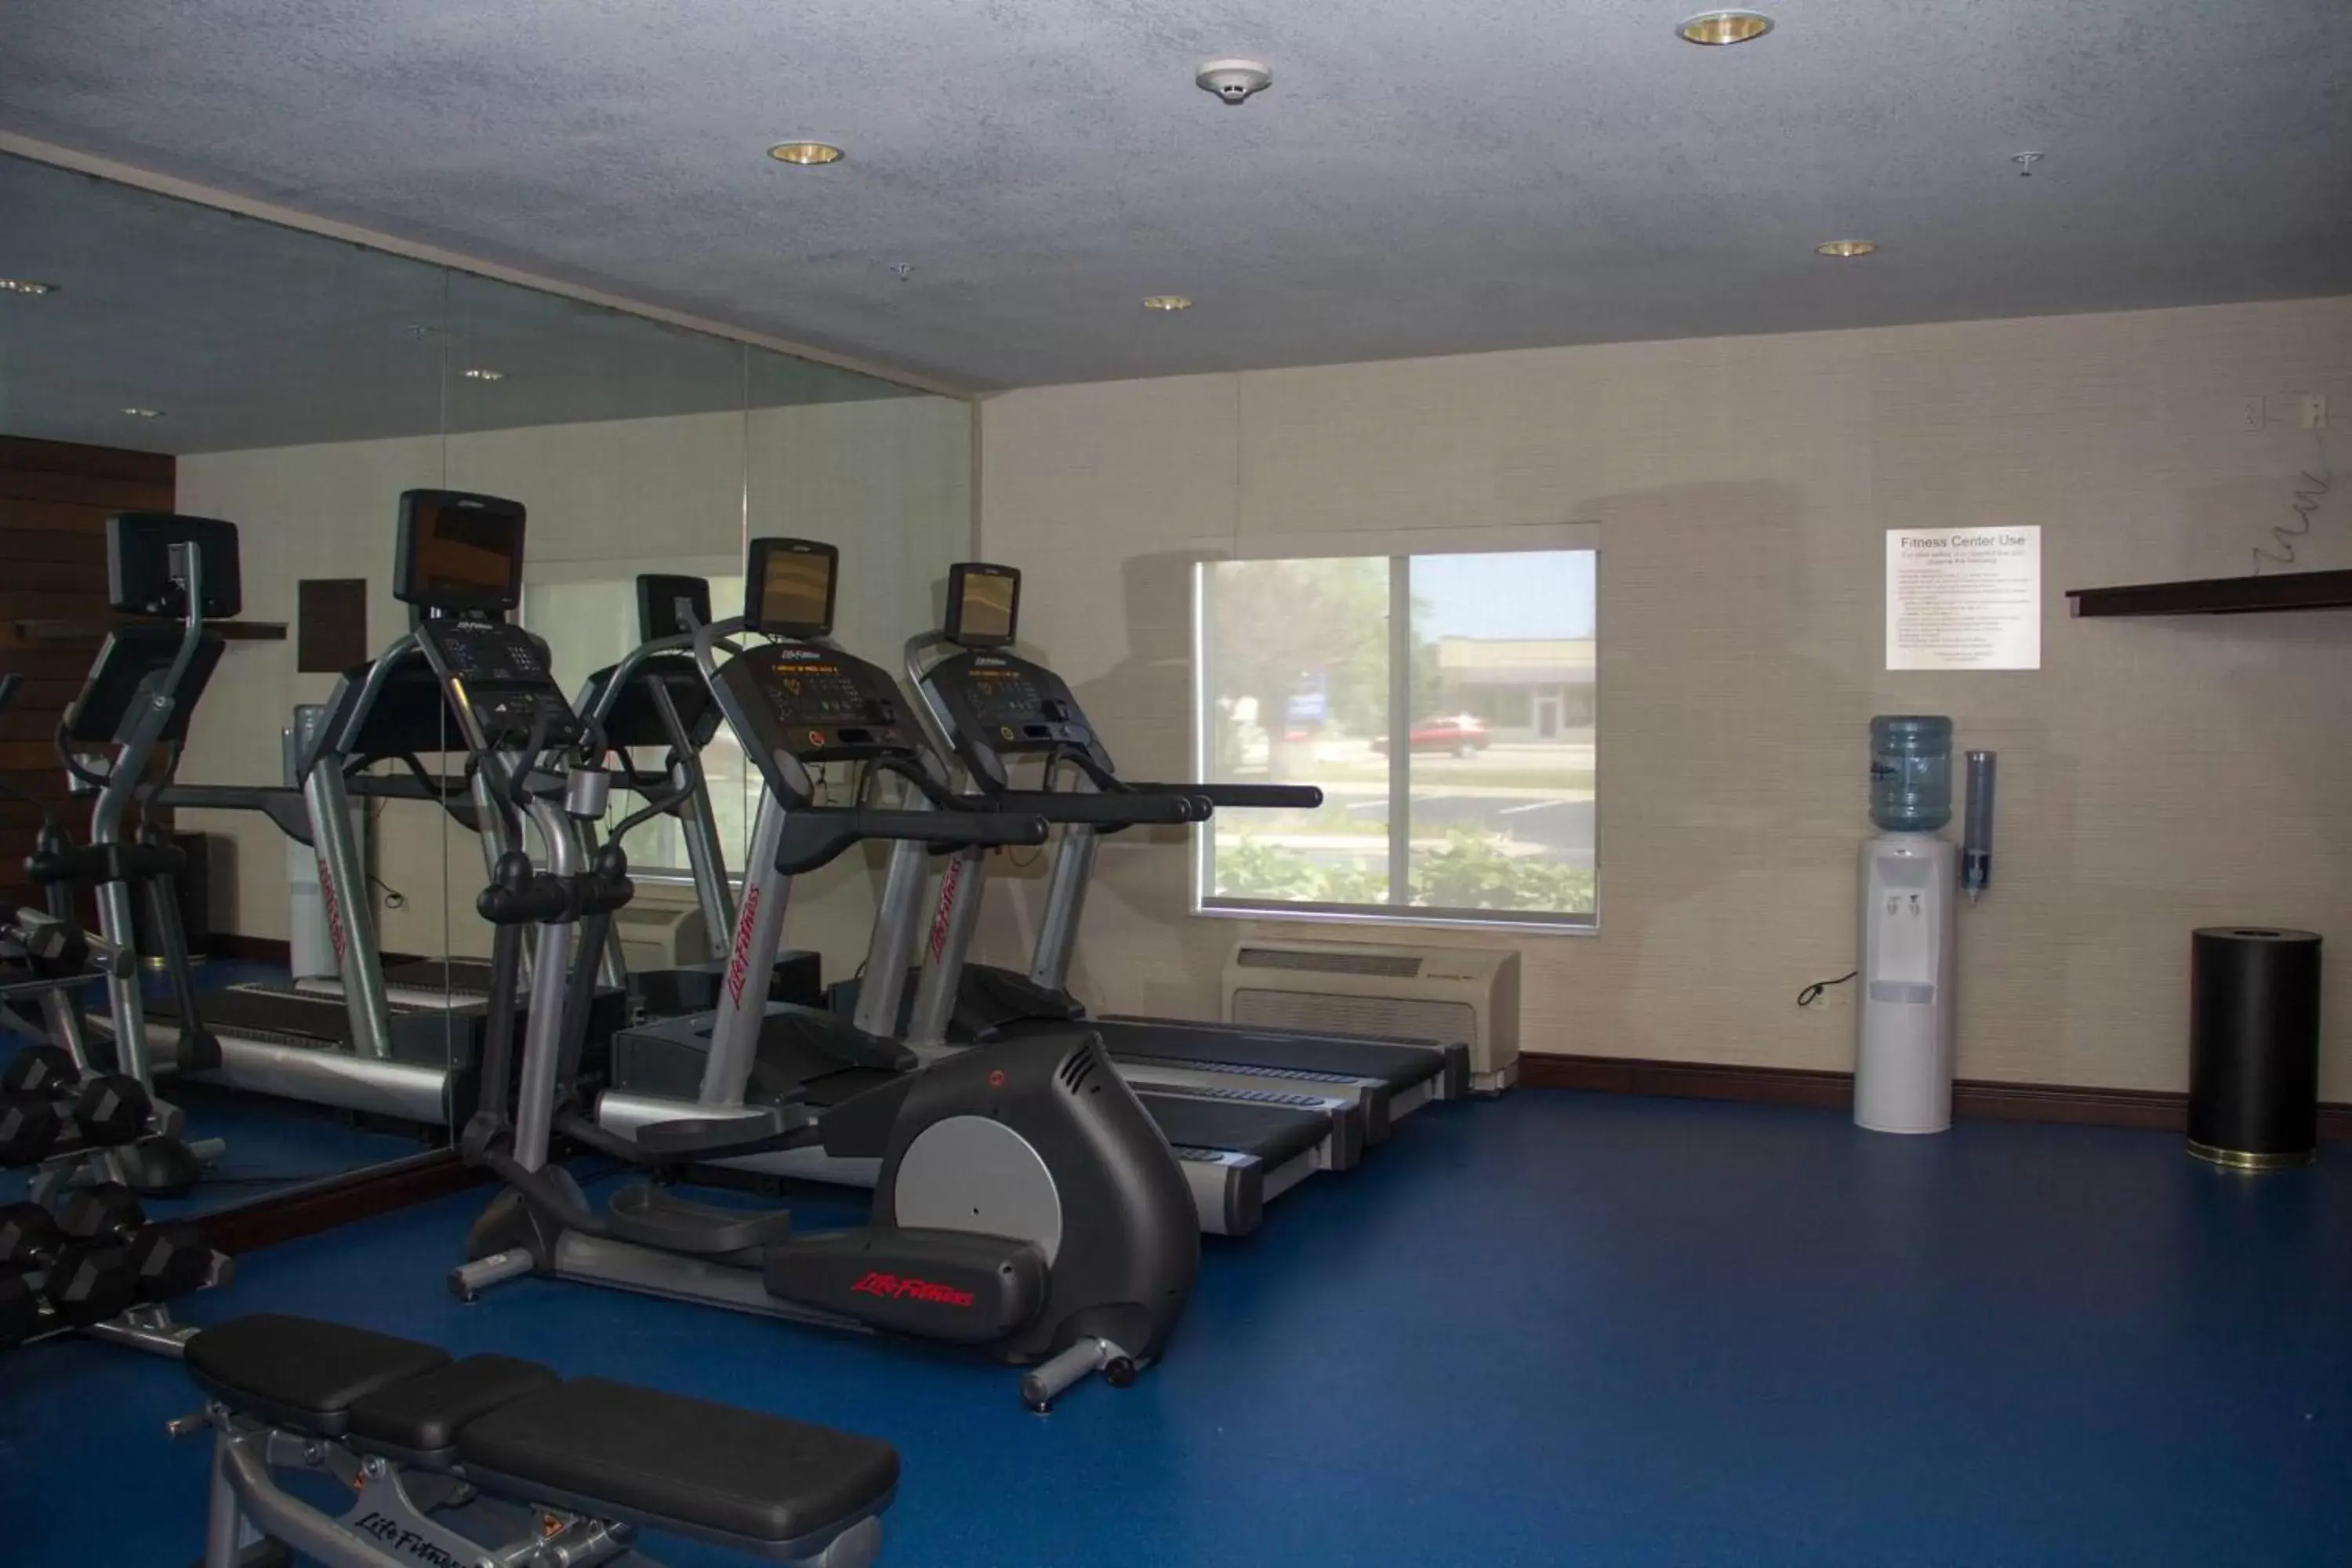 Fitness centre/facilities, Fitness Center/Facilities in Fairfield Inn & Suites by Marriott Watervliet St. Joseph